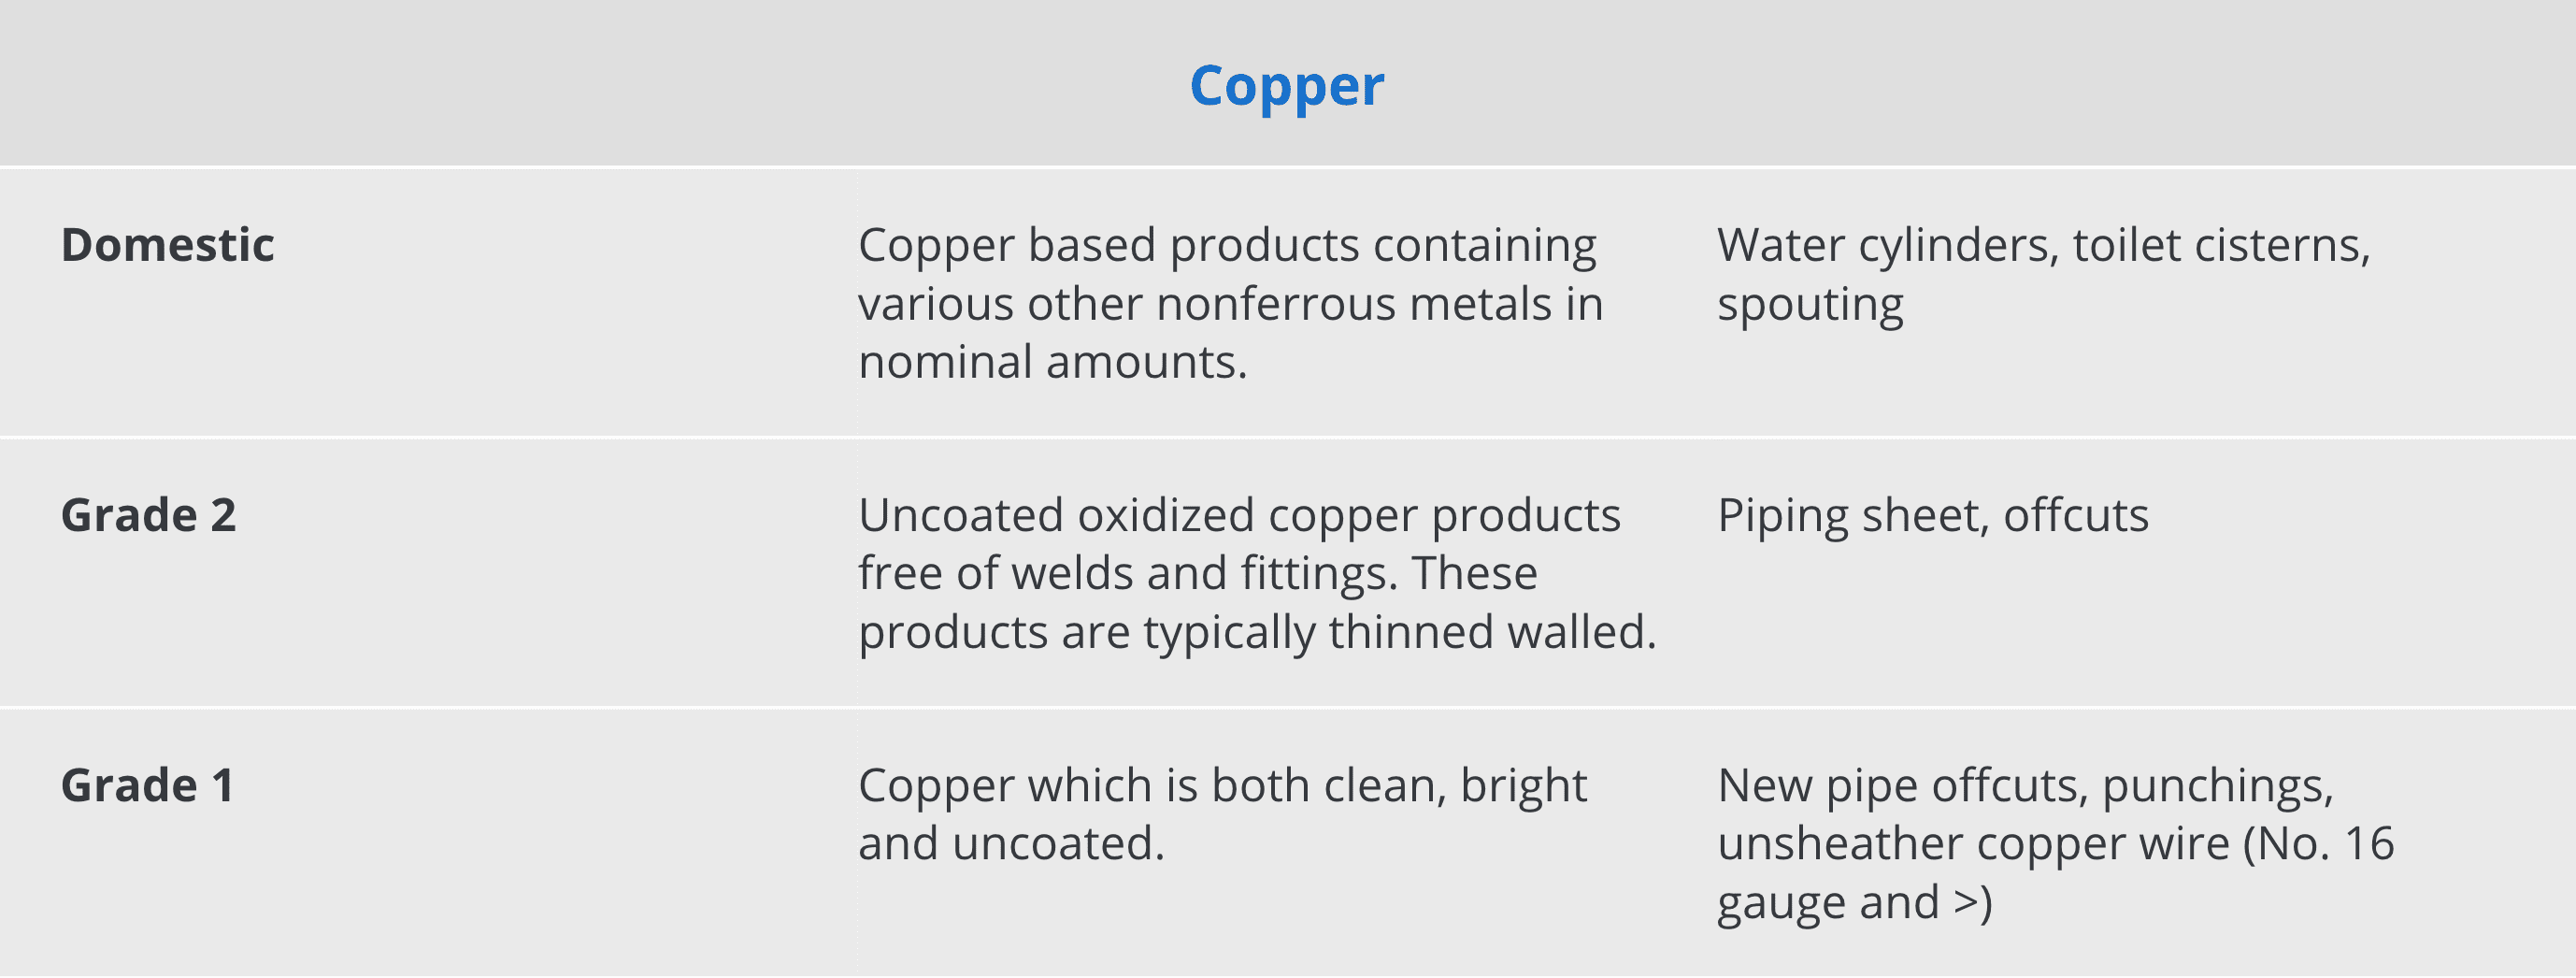 copper-information